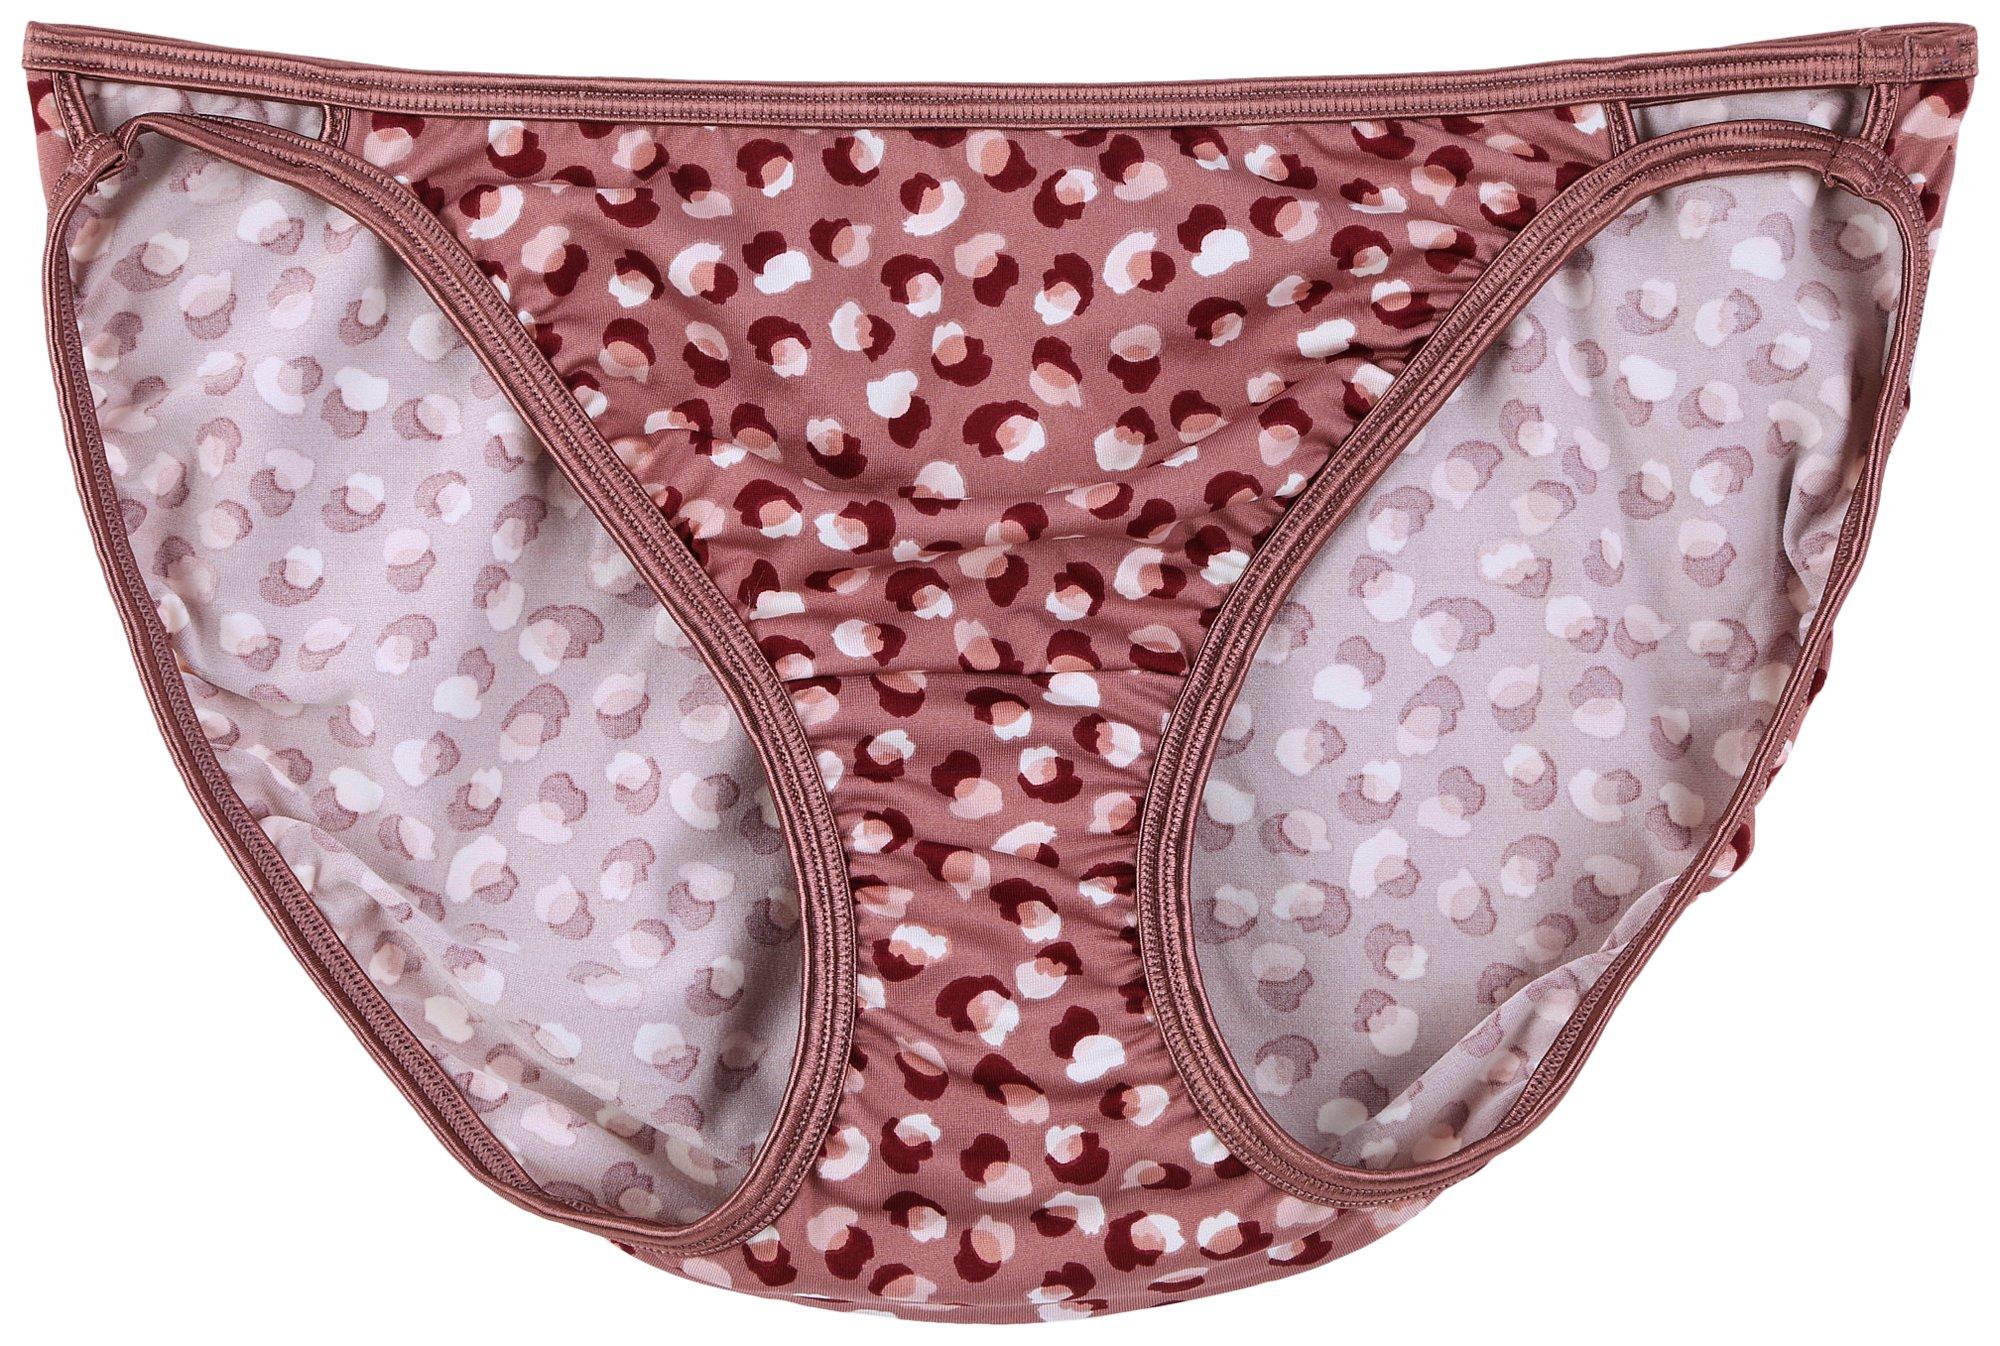 Vanity Fair panties Illumination string bikini size 7/L 3 pair